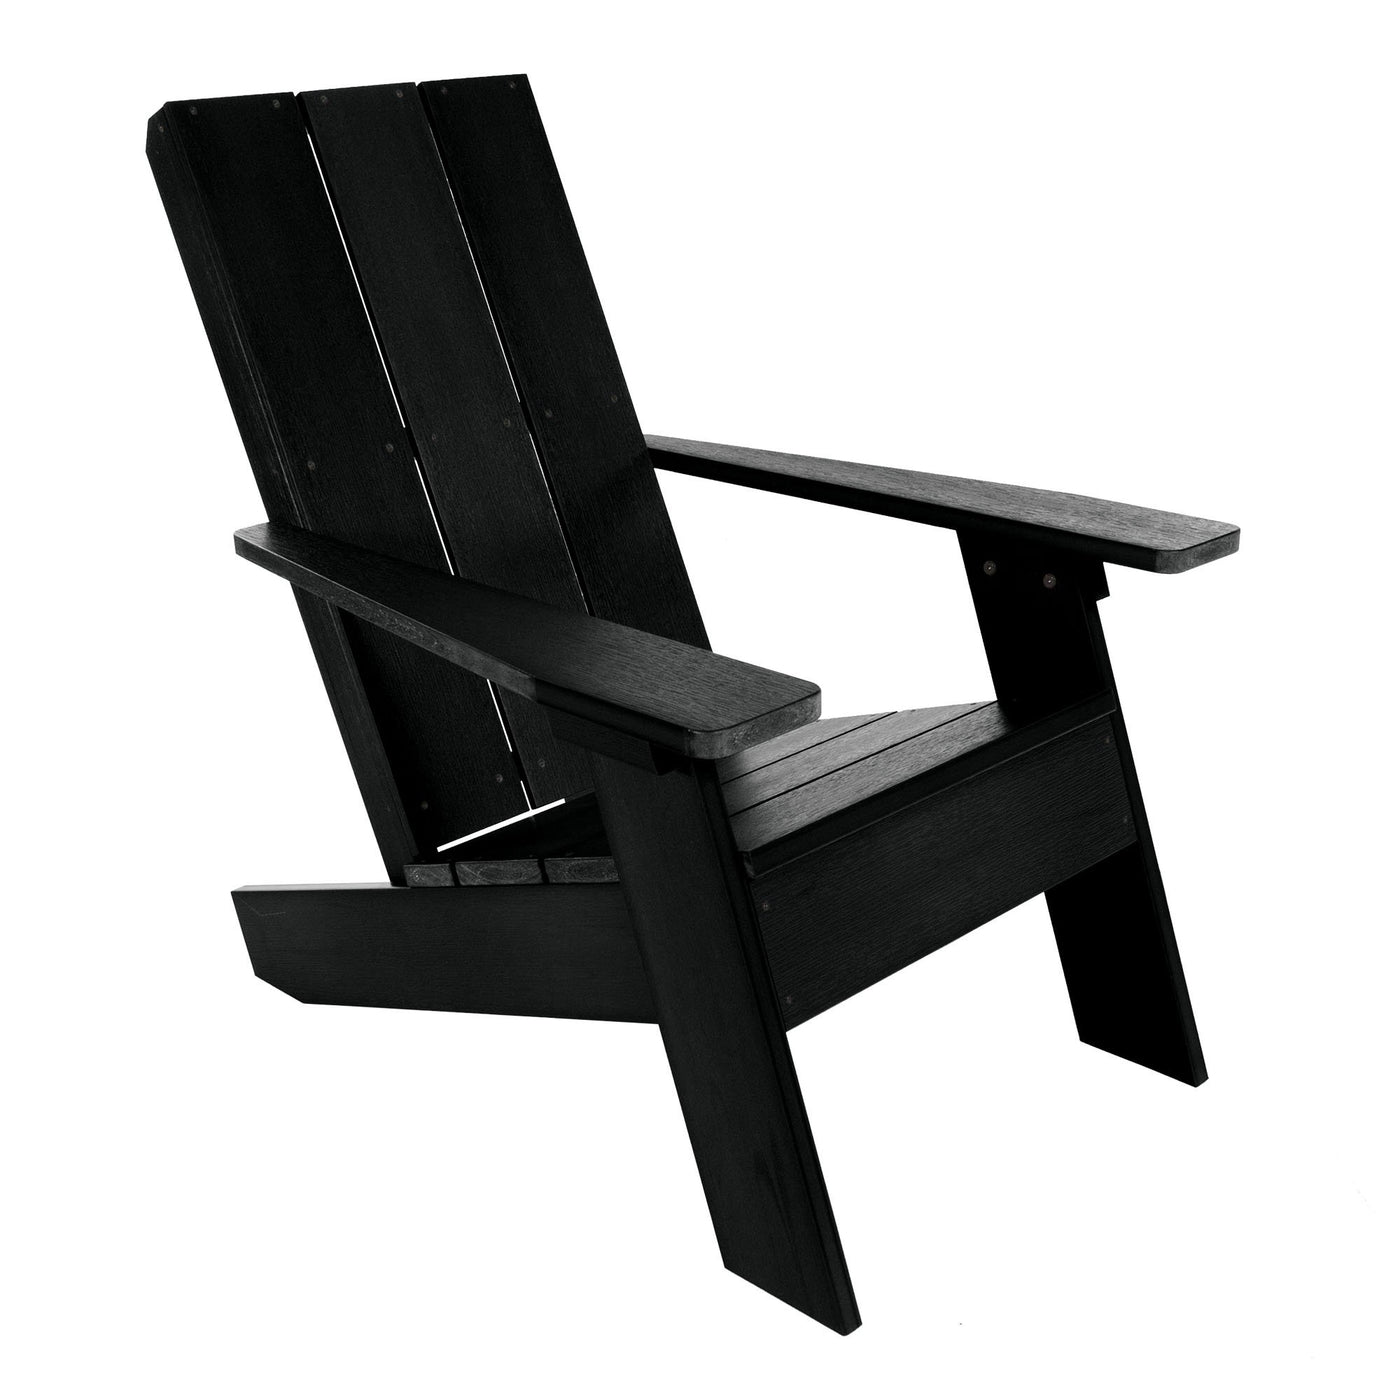 Italica Modern Adirondack chair in black